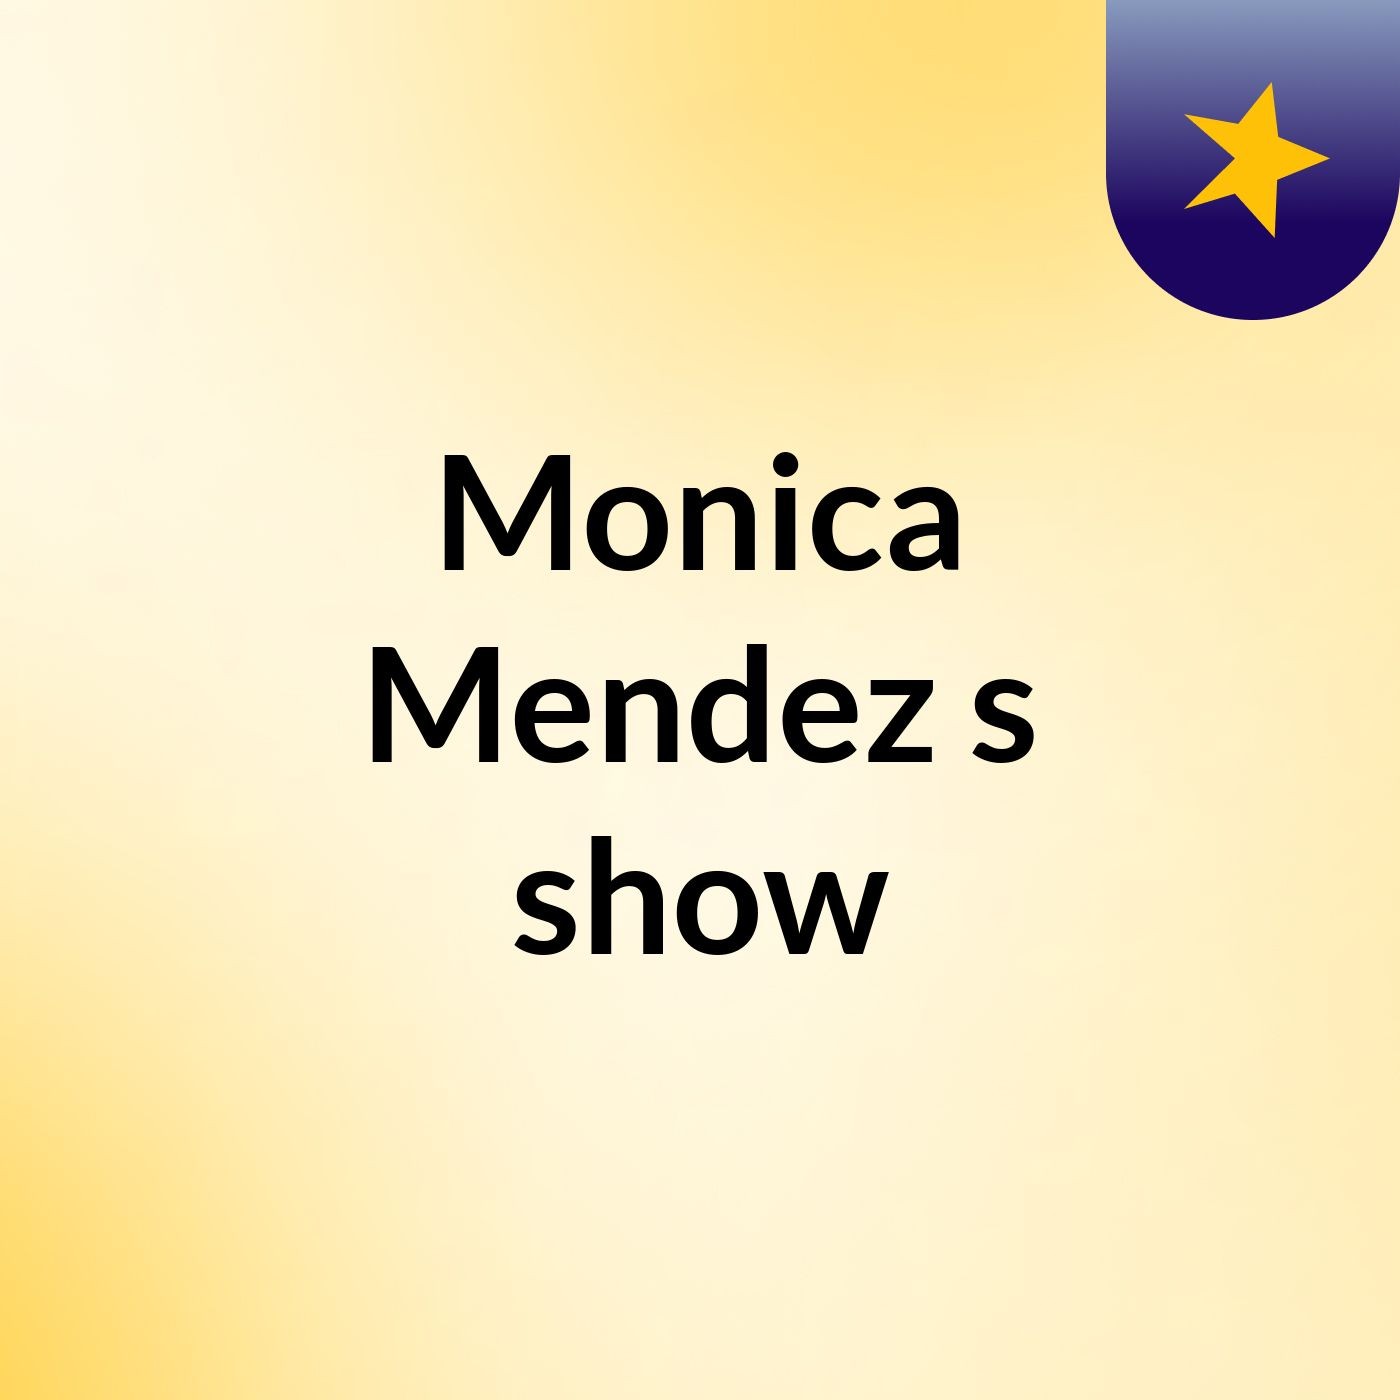 Monica Mendez's show